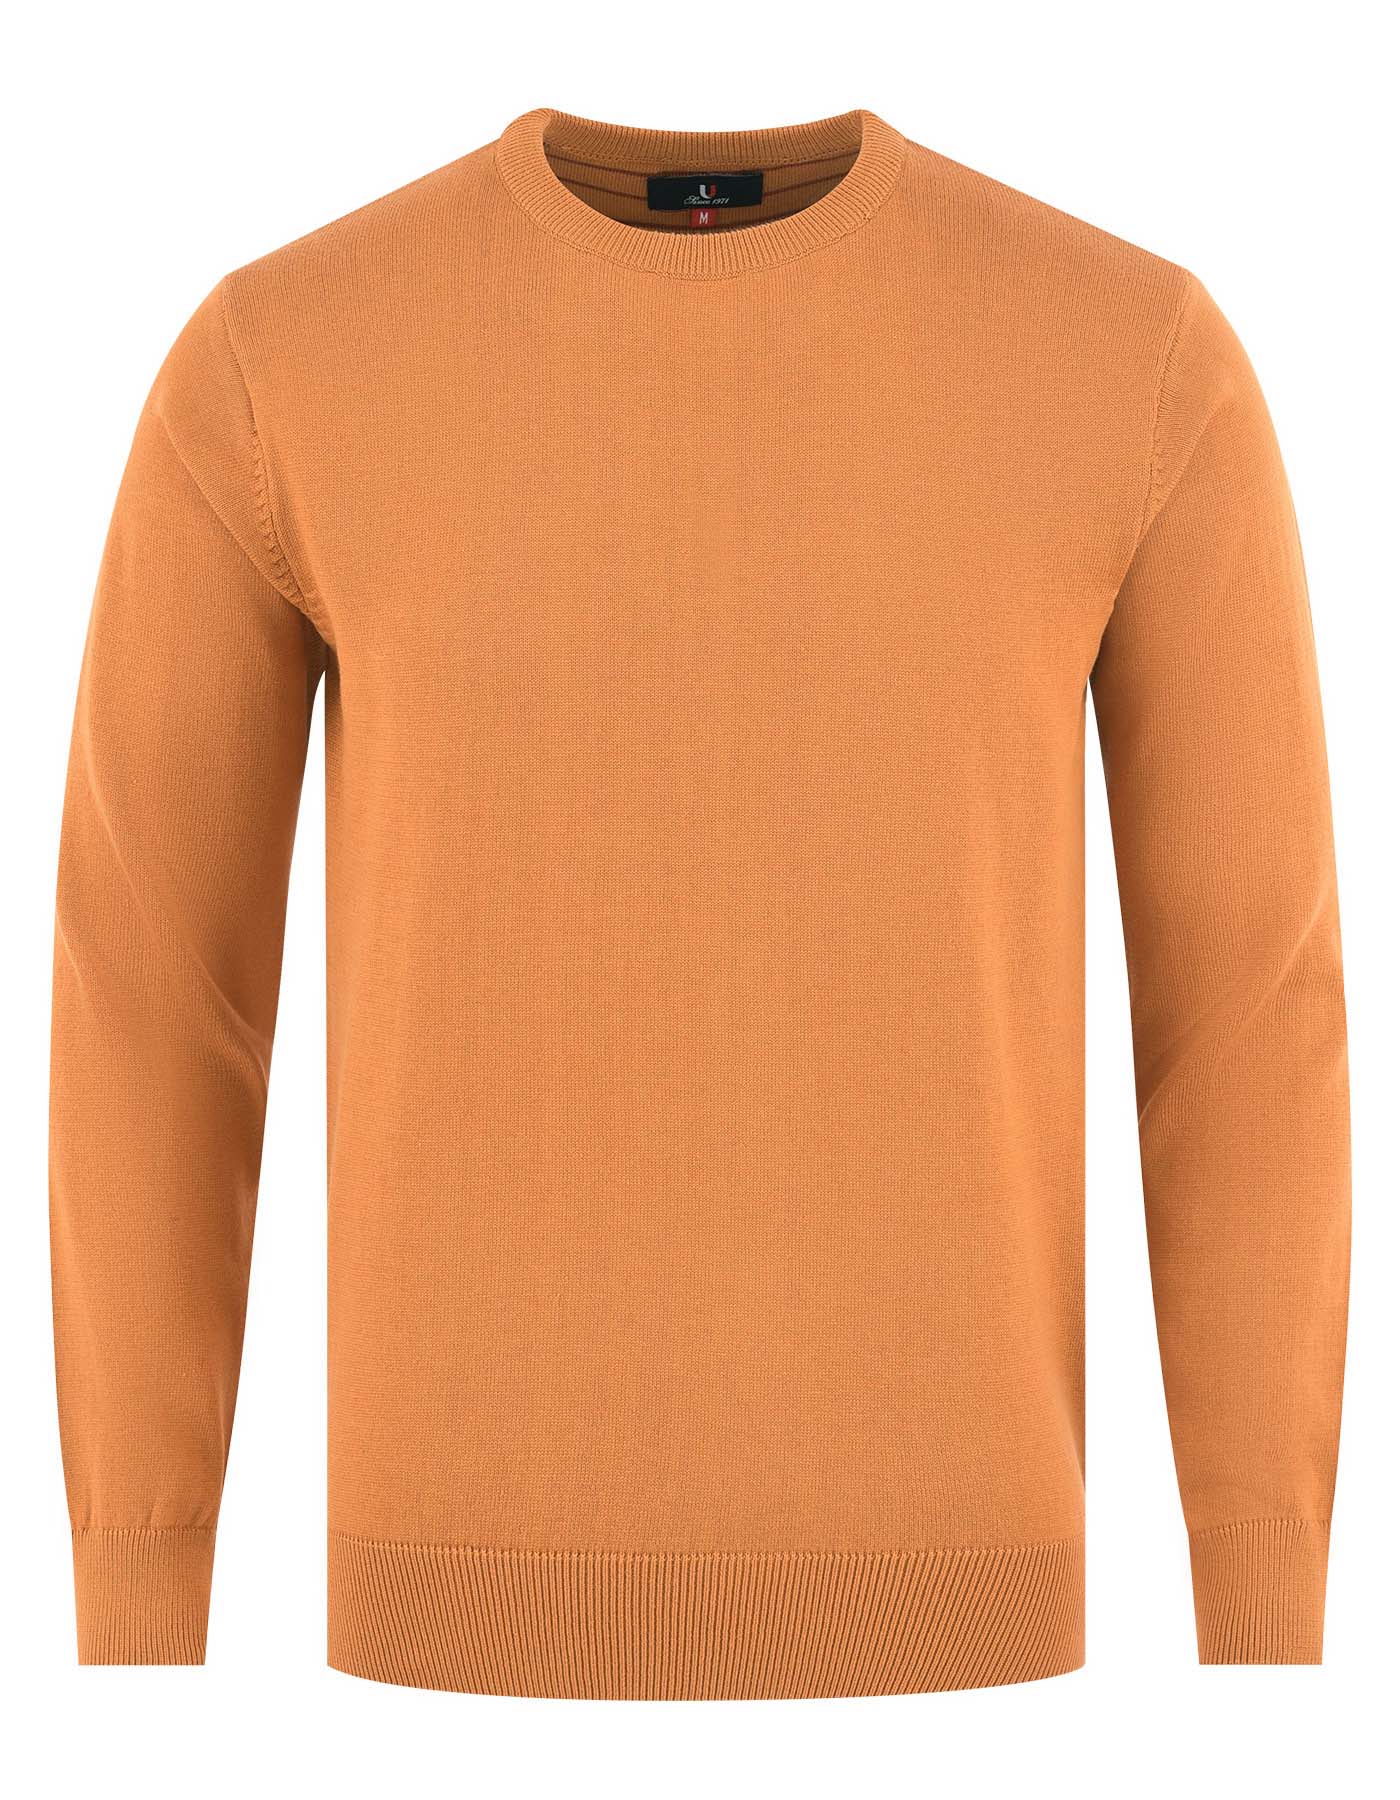 Mustard Sweater For Men